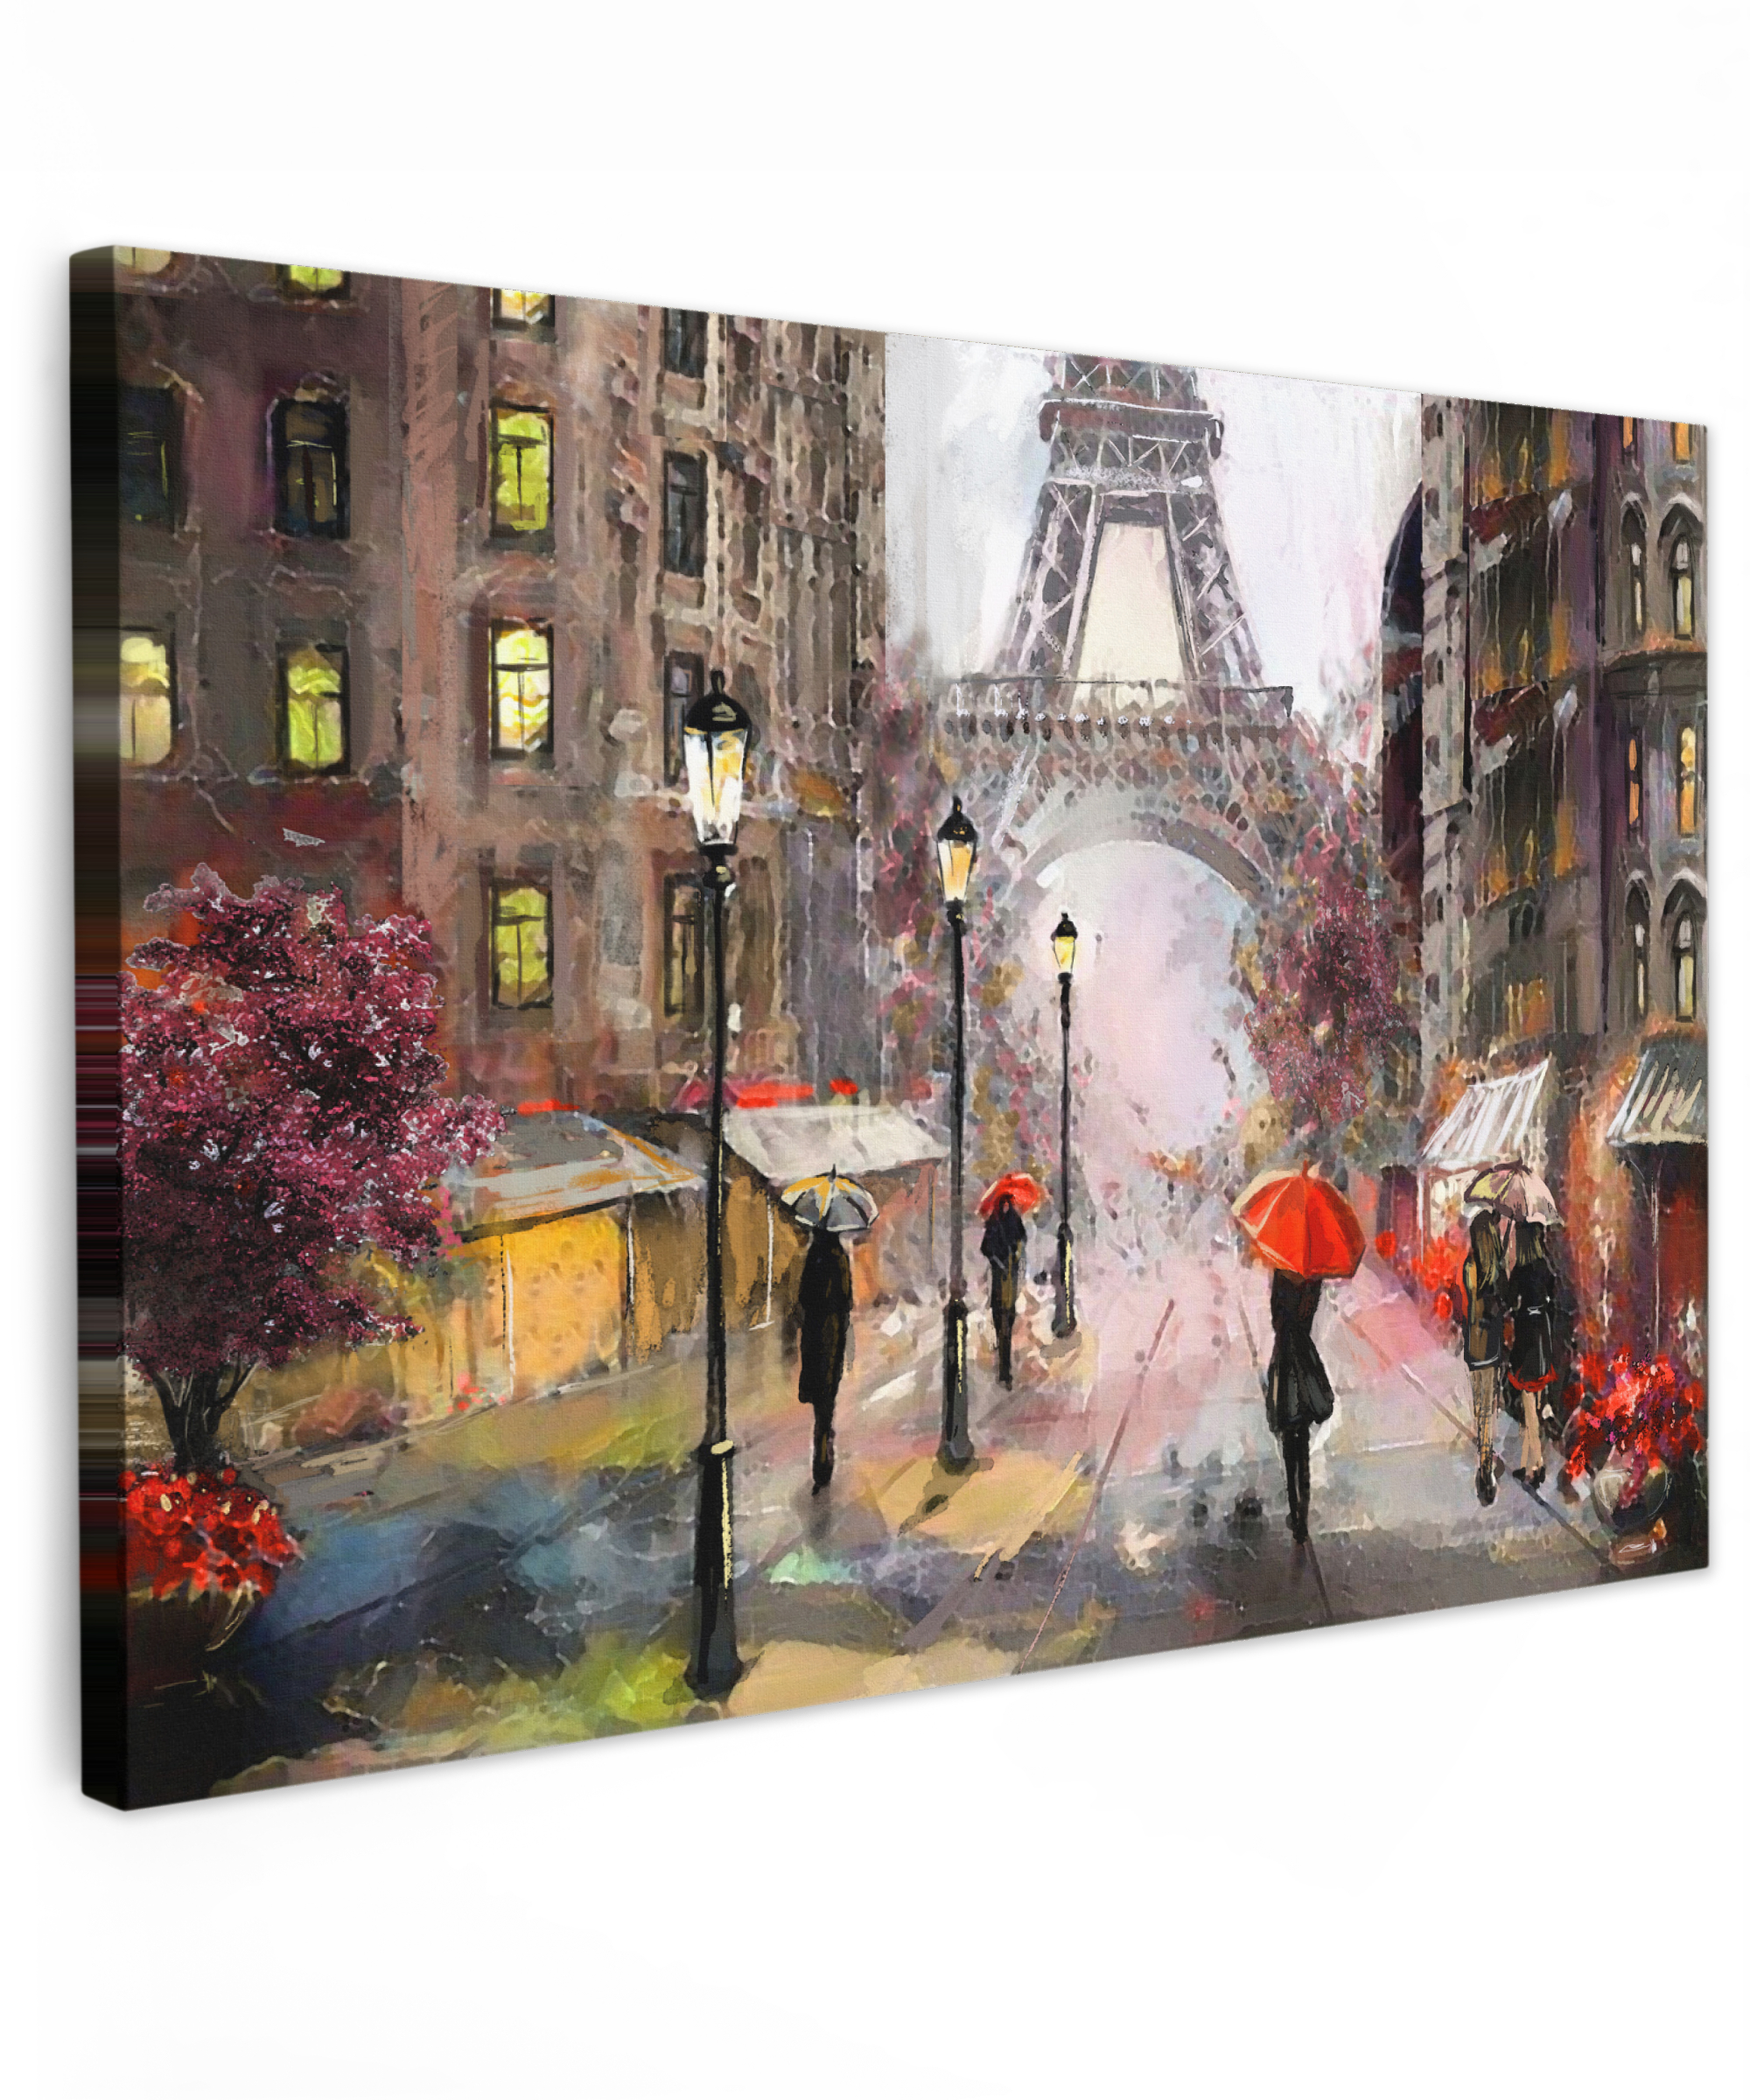 Leinwandbild - Gemälde - Paris - Eiffelturm - Regenschirm - Ölgemälde